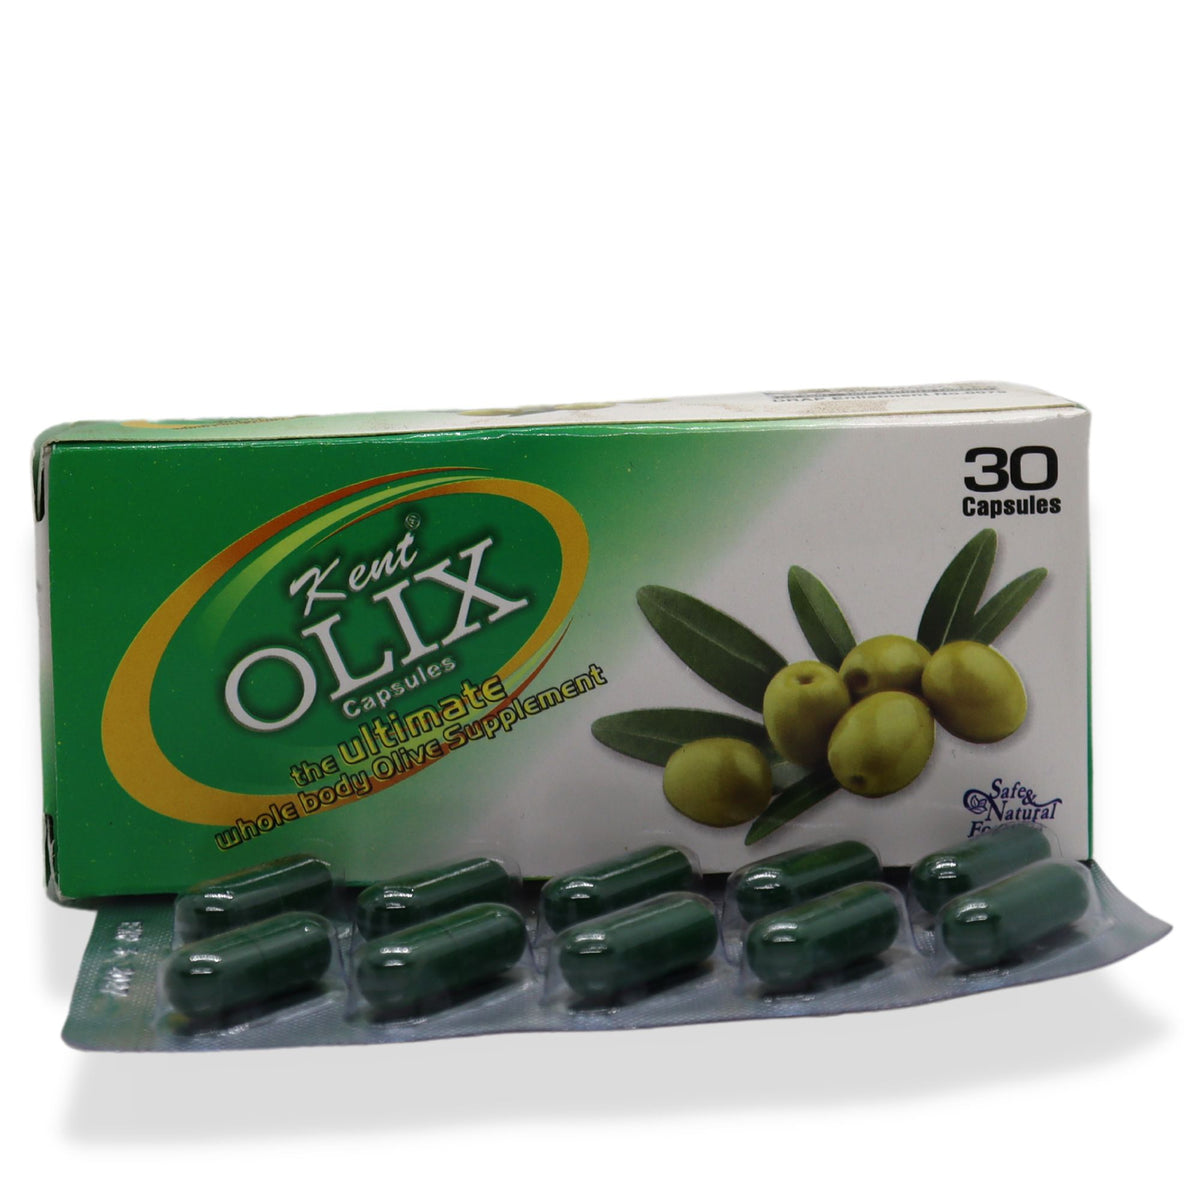 Olix Capsules (Oilve Extract)